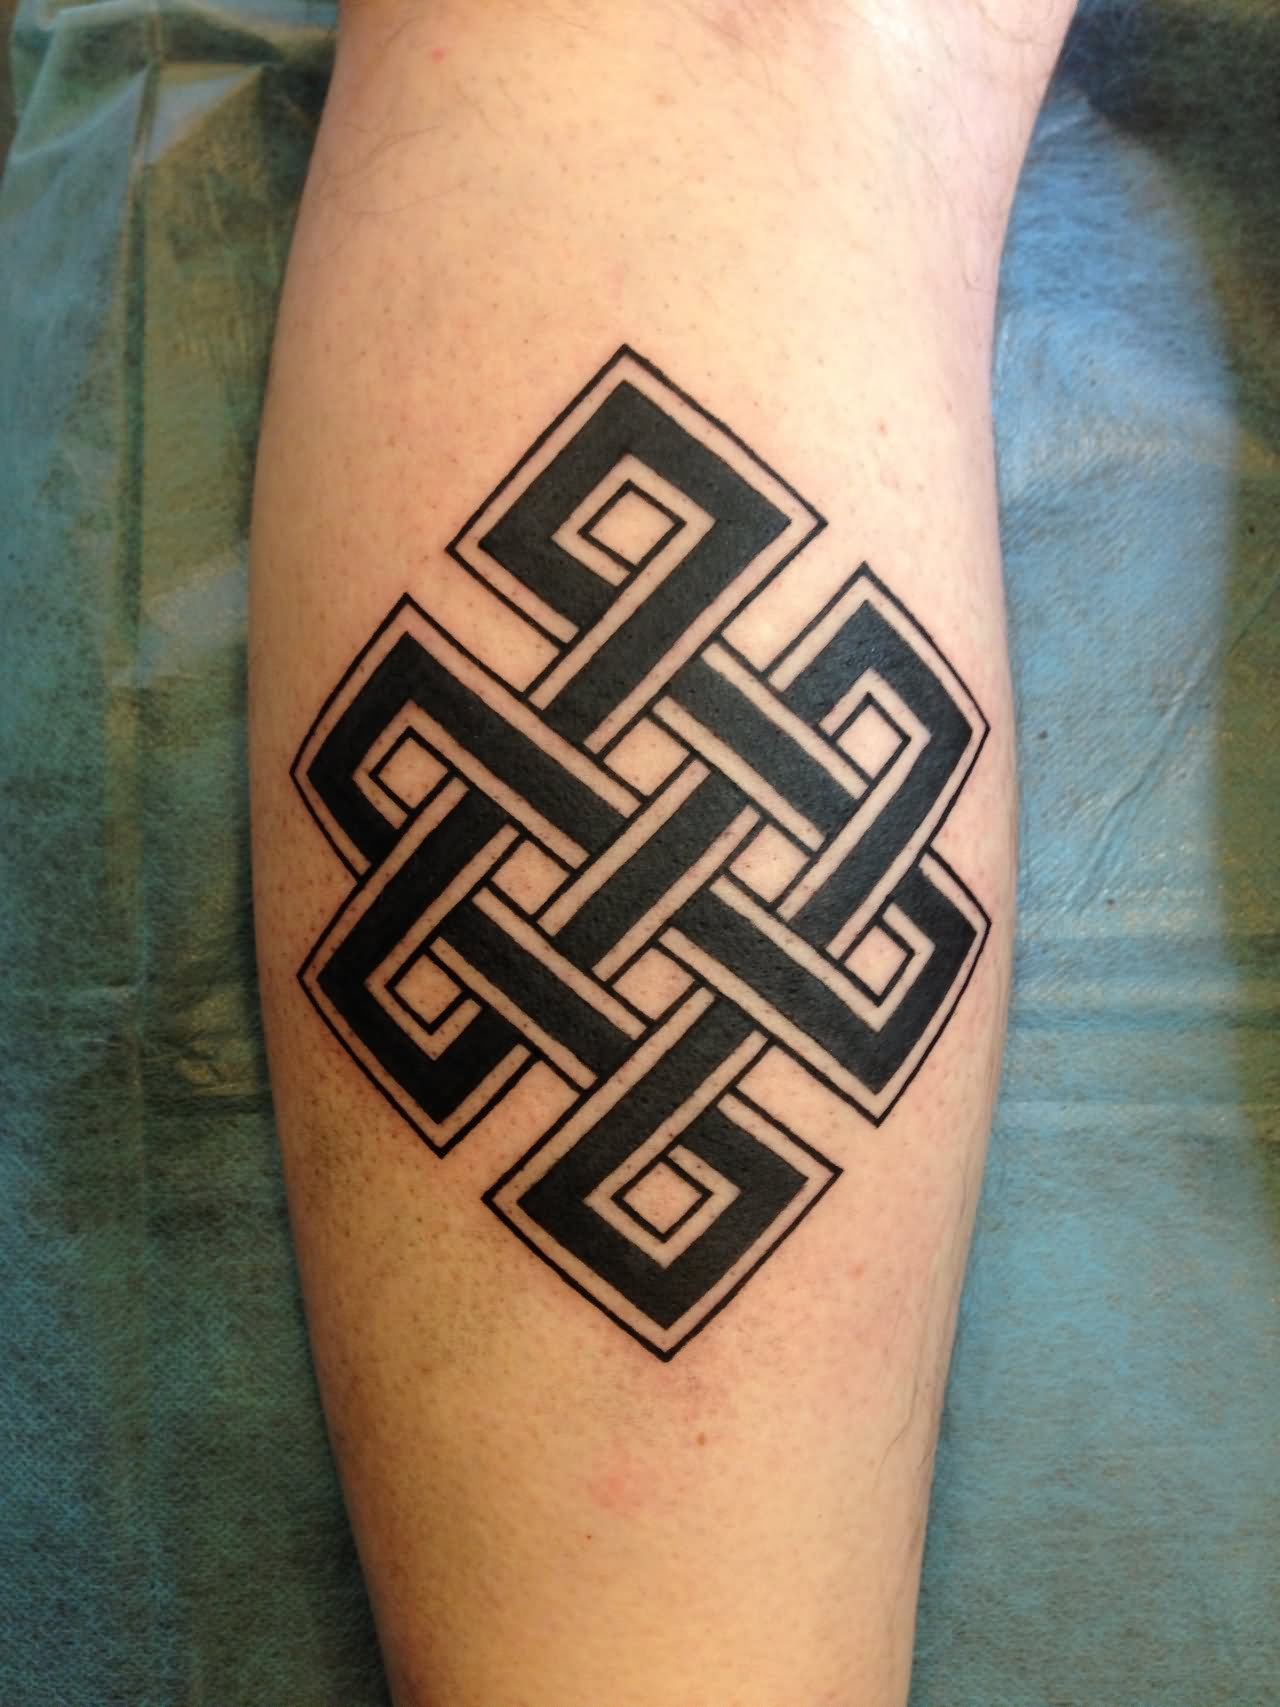 Black Endless Knot Tattoo Design For Leg